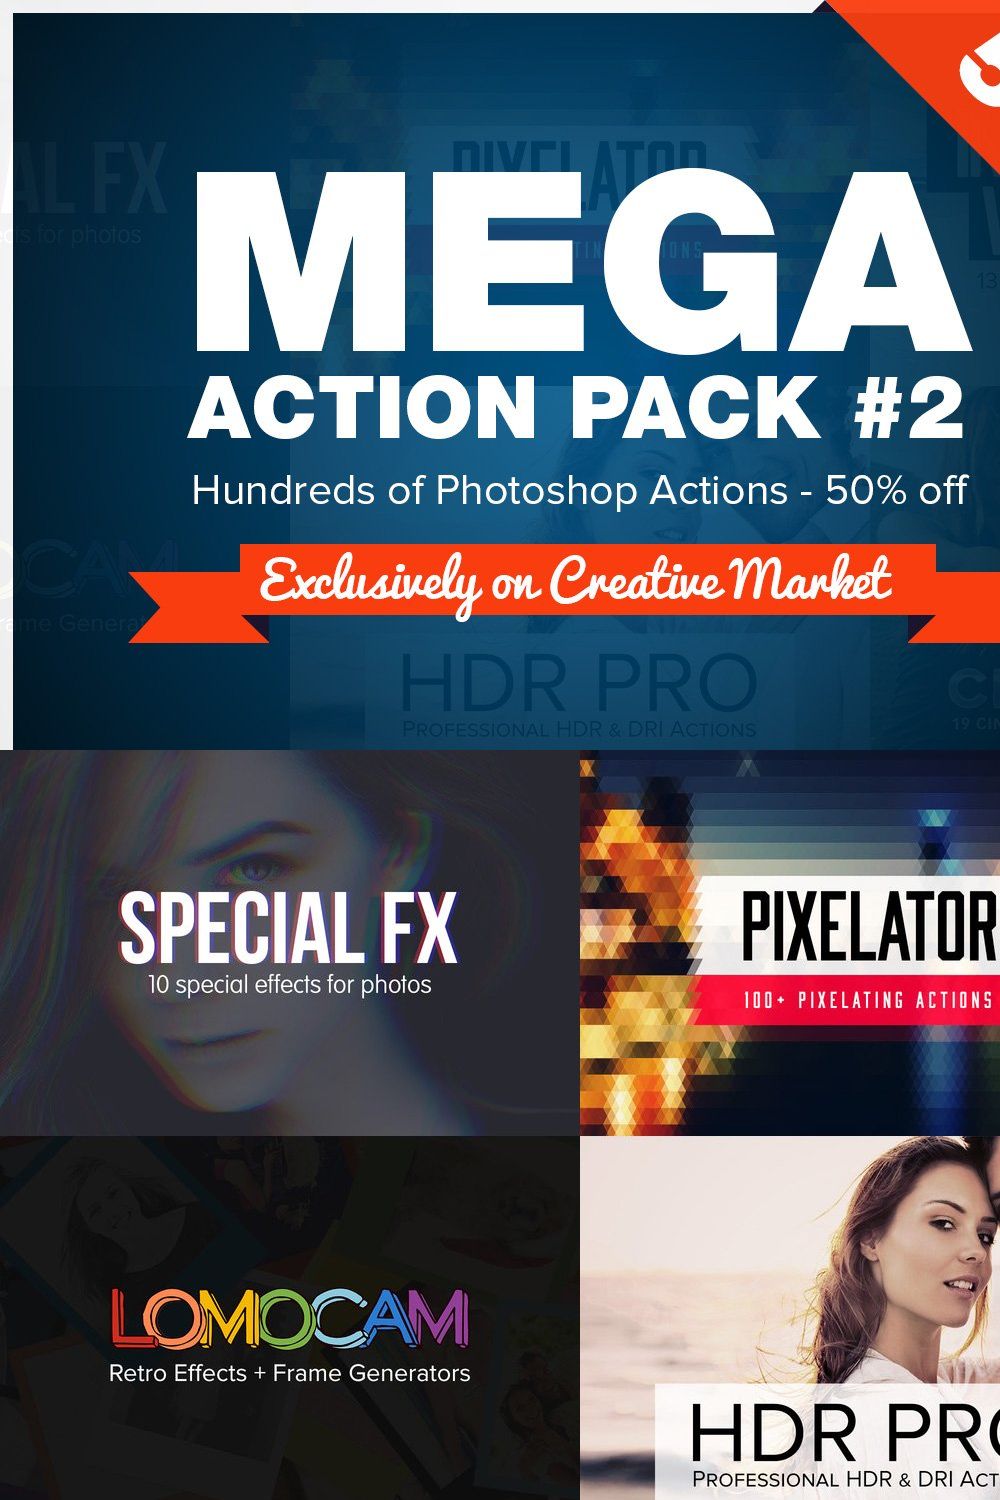 Mega Action Pack #2 pinterest preview image.